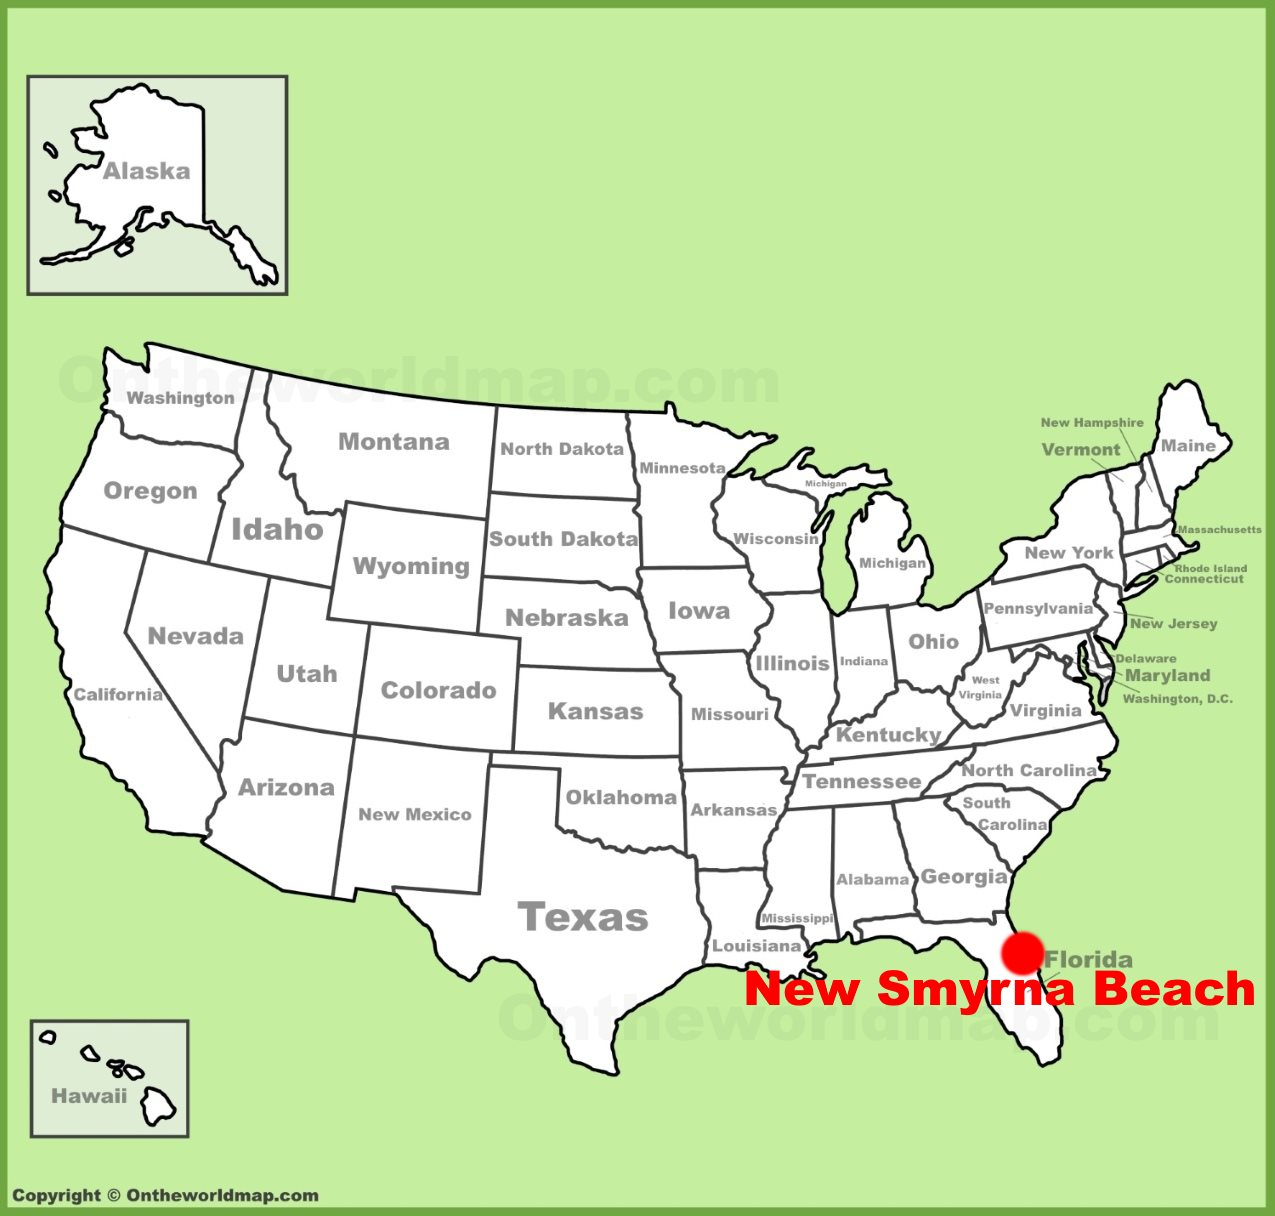 New Smyrna Beach Location On The U.s. Map - Smyrna Beach Florida Map